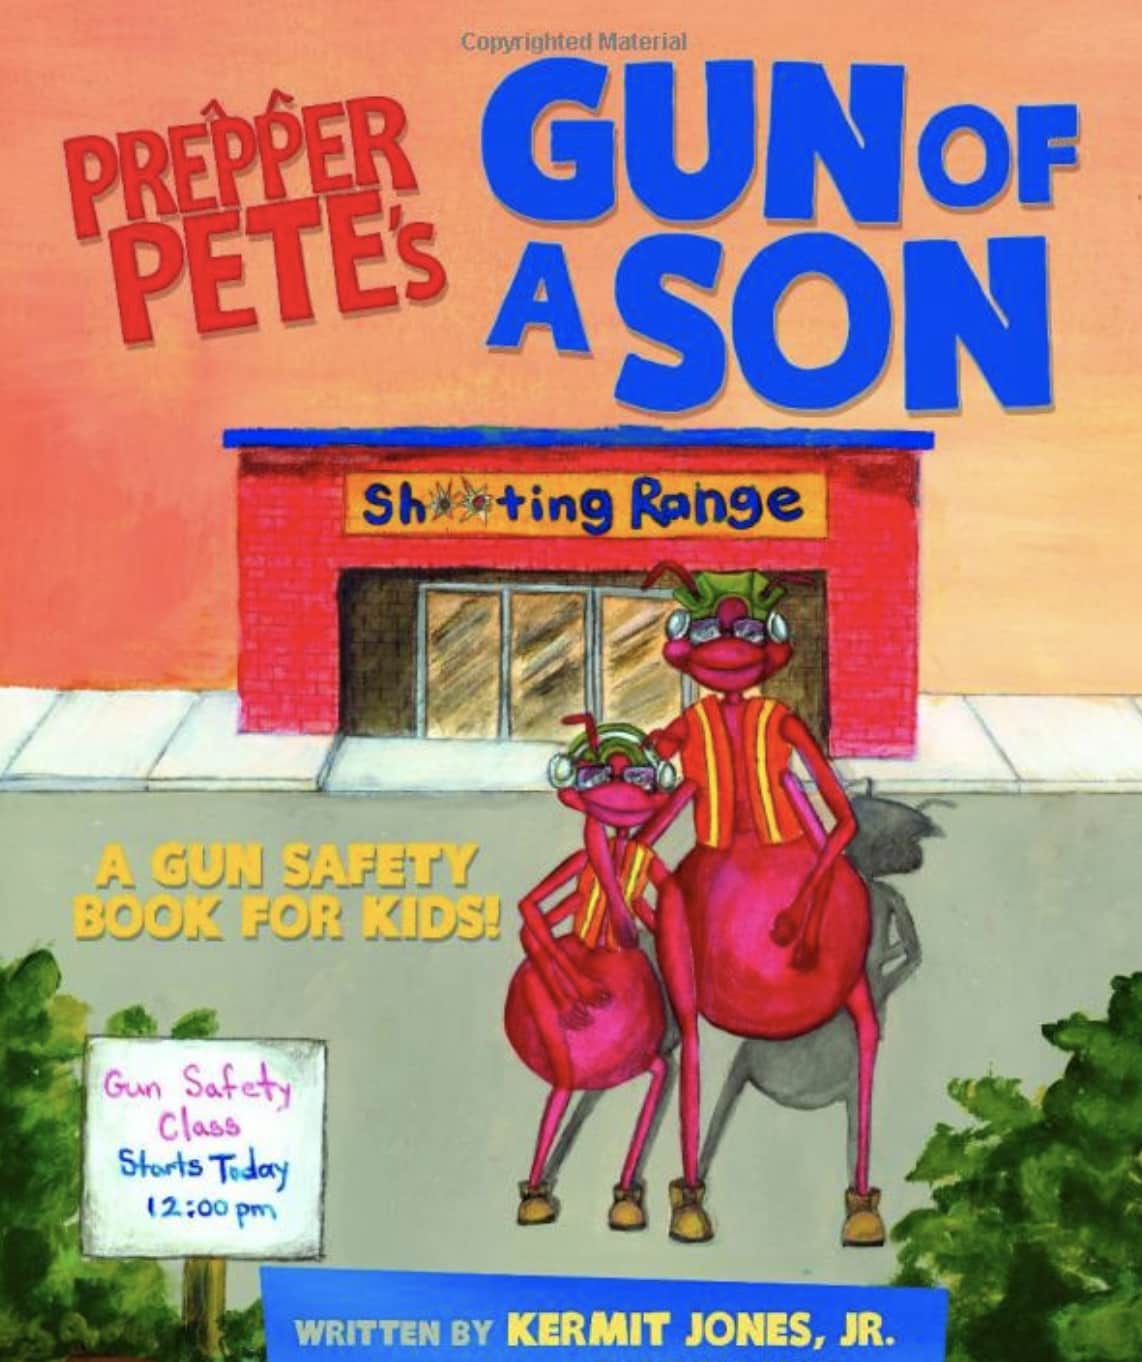 Prepper Pete's Gun of a Son: A Gun Safety Book for Kids